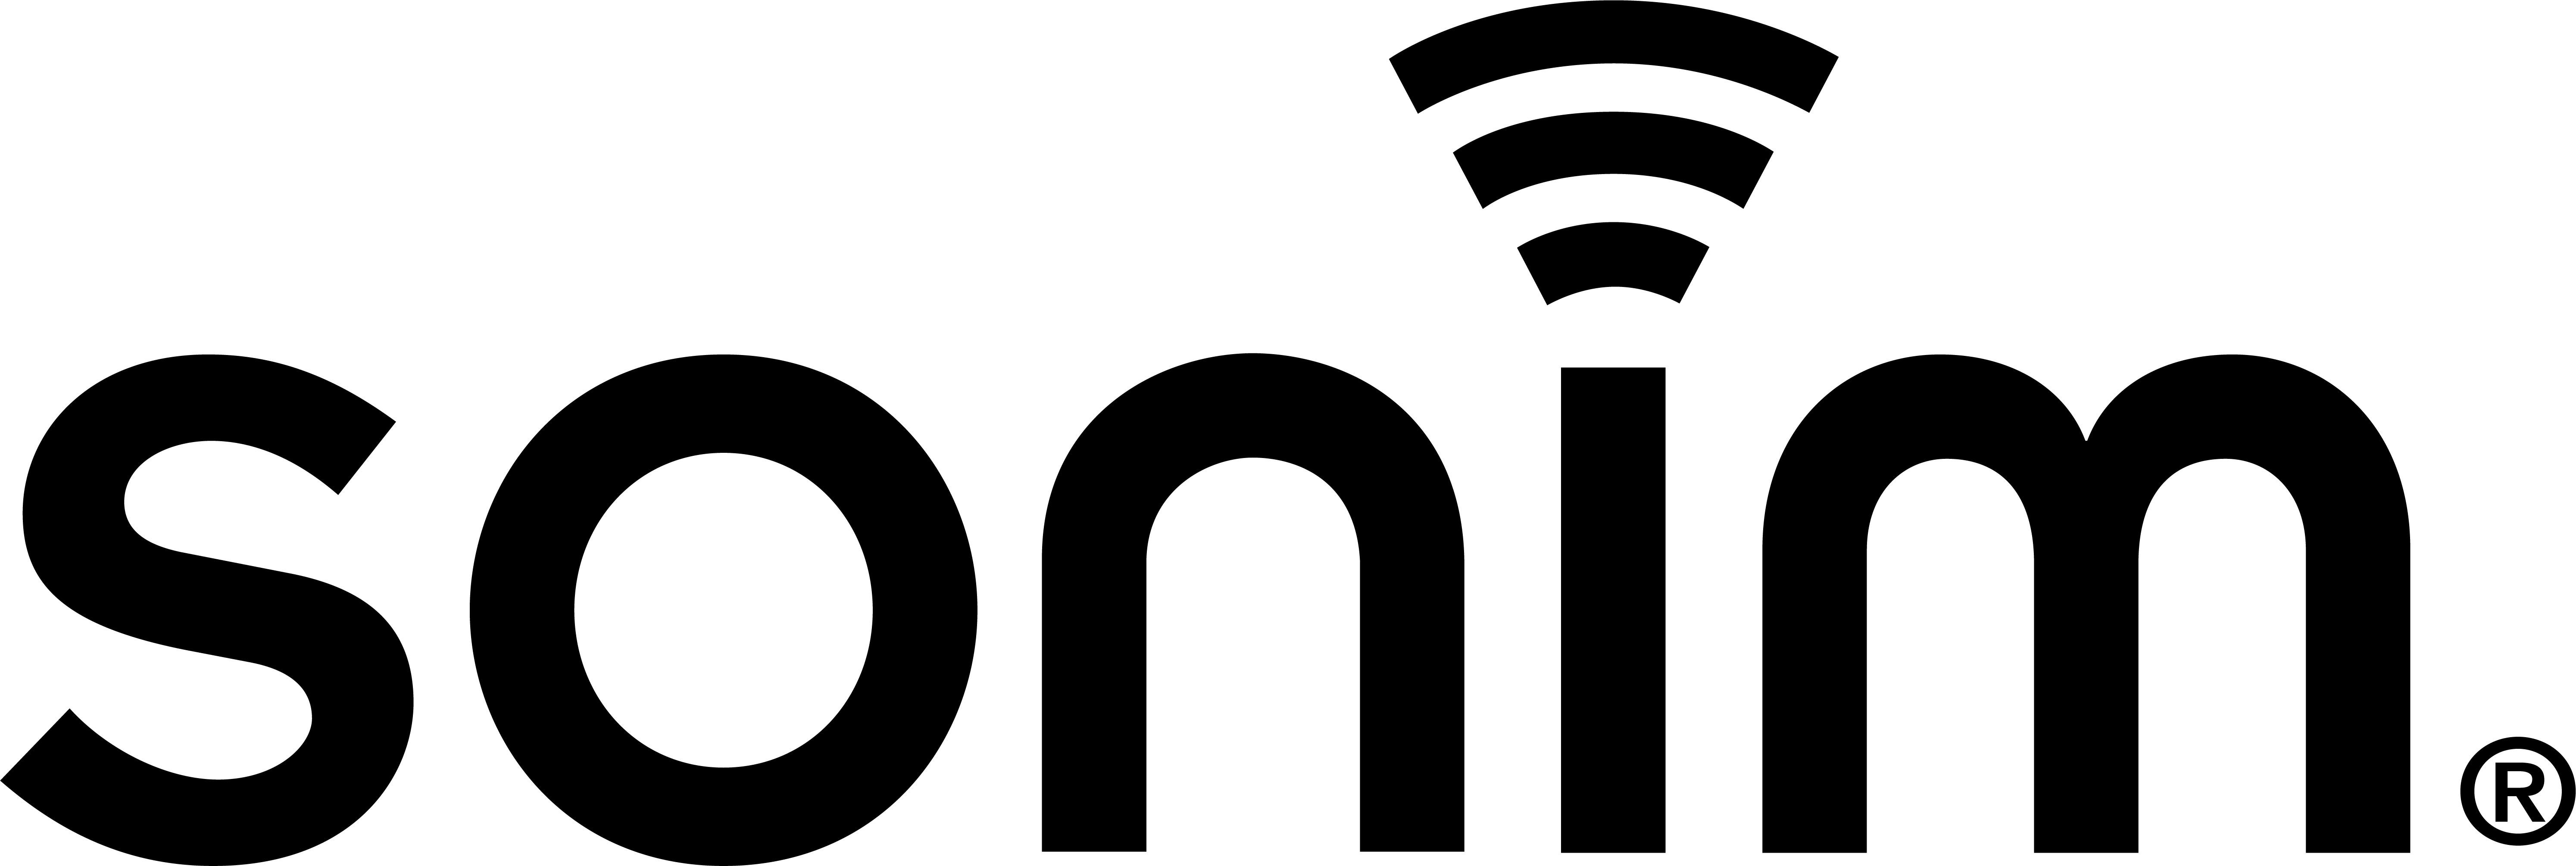 Sonim Logo - Sonim Technologies - Car Connectivity Consortium - Car Connectivity ...